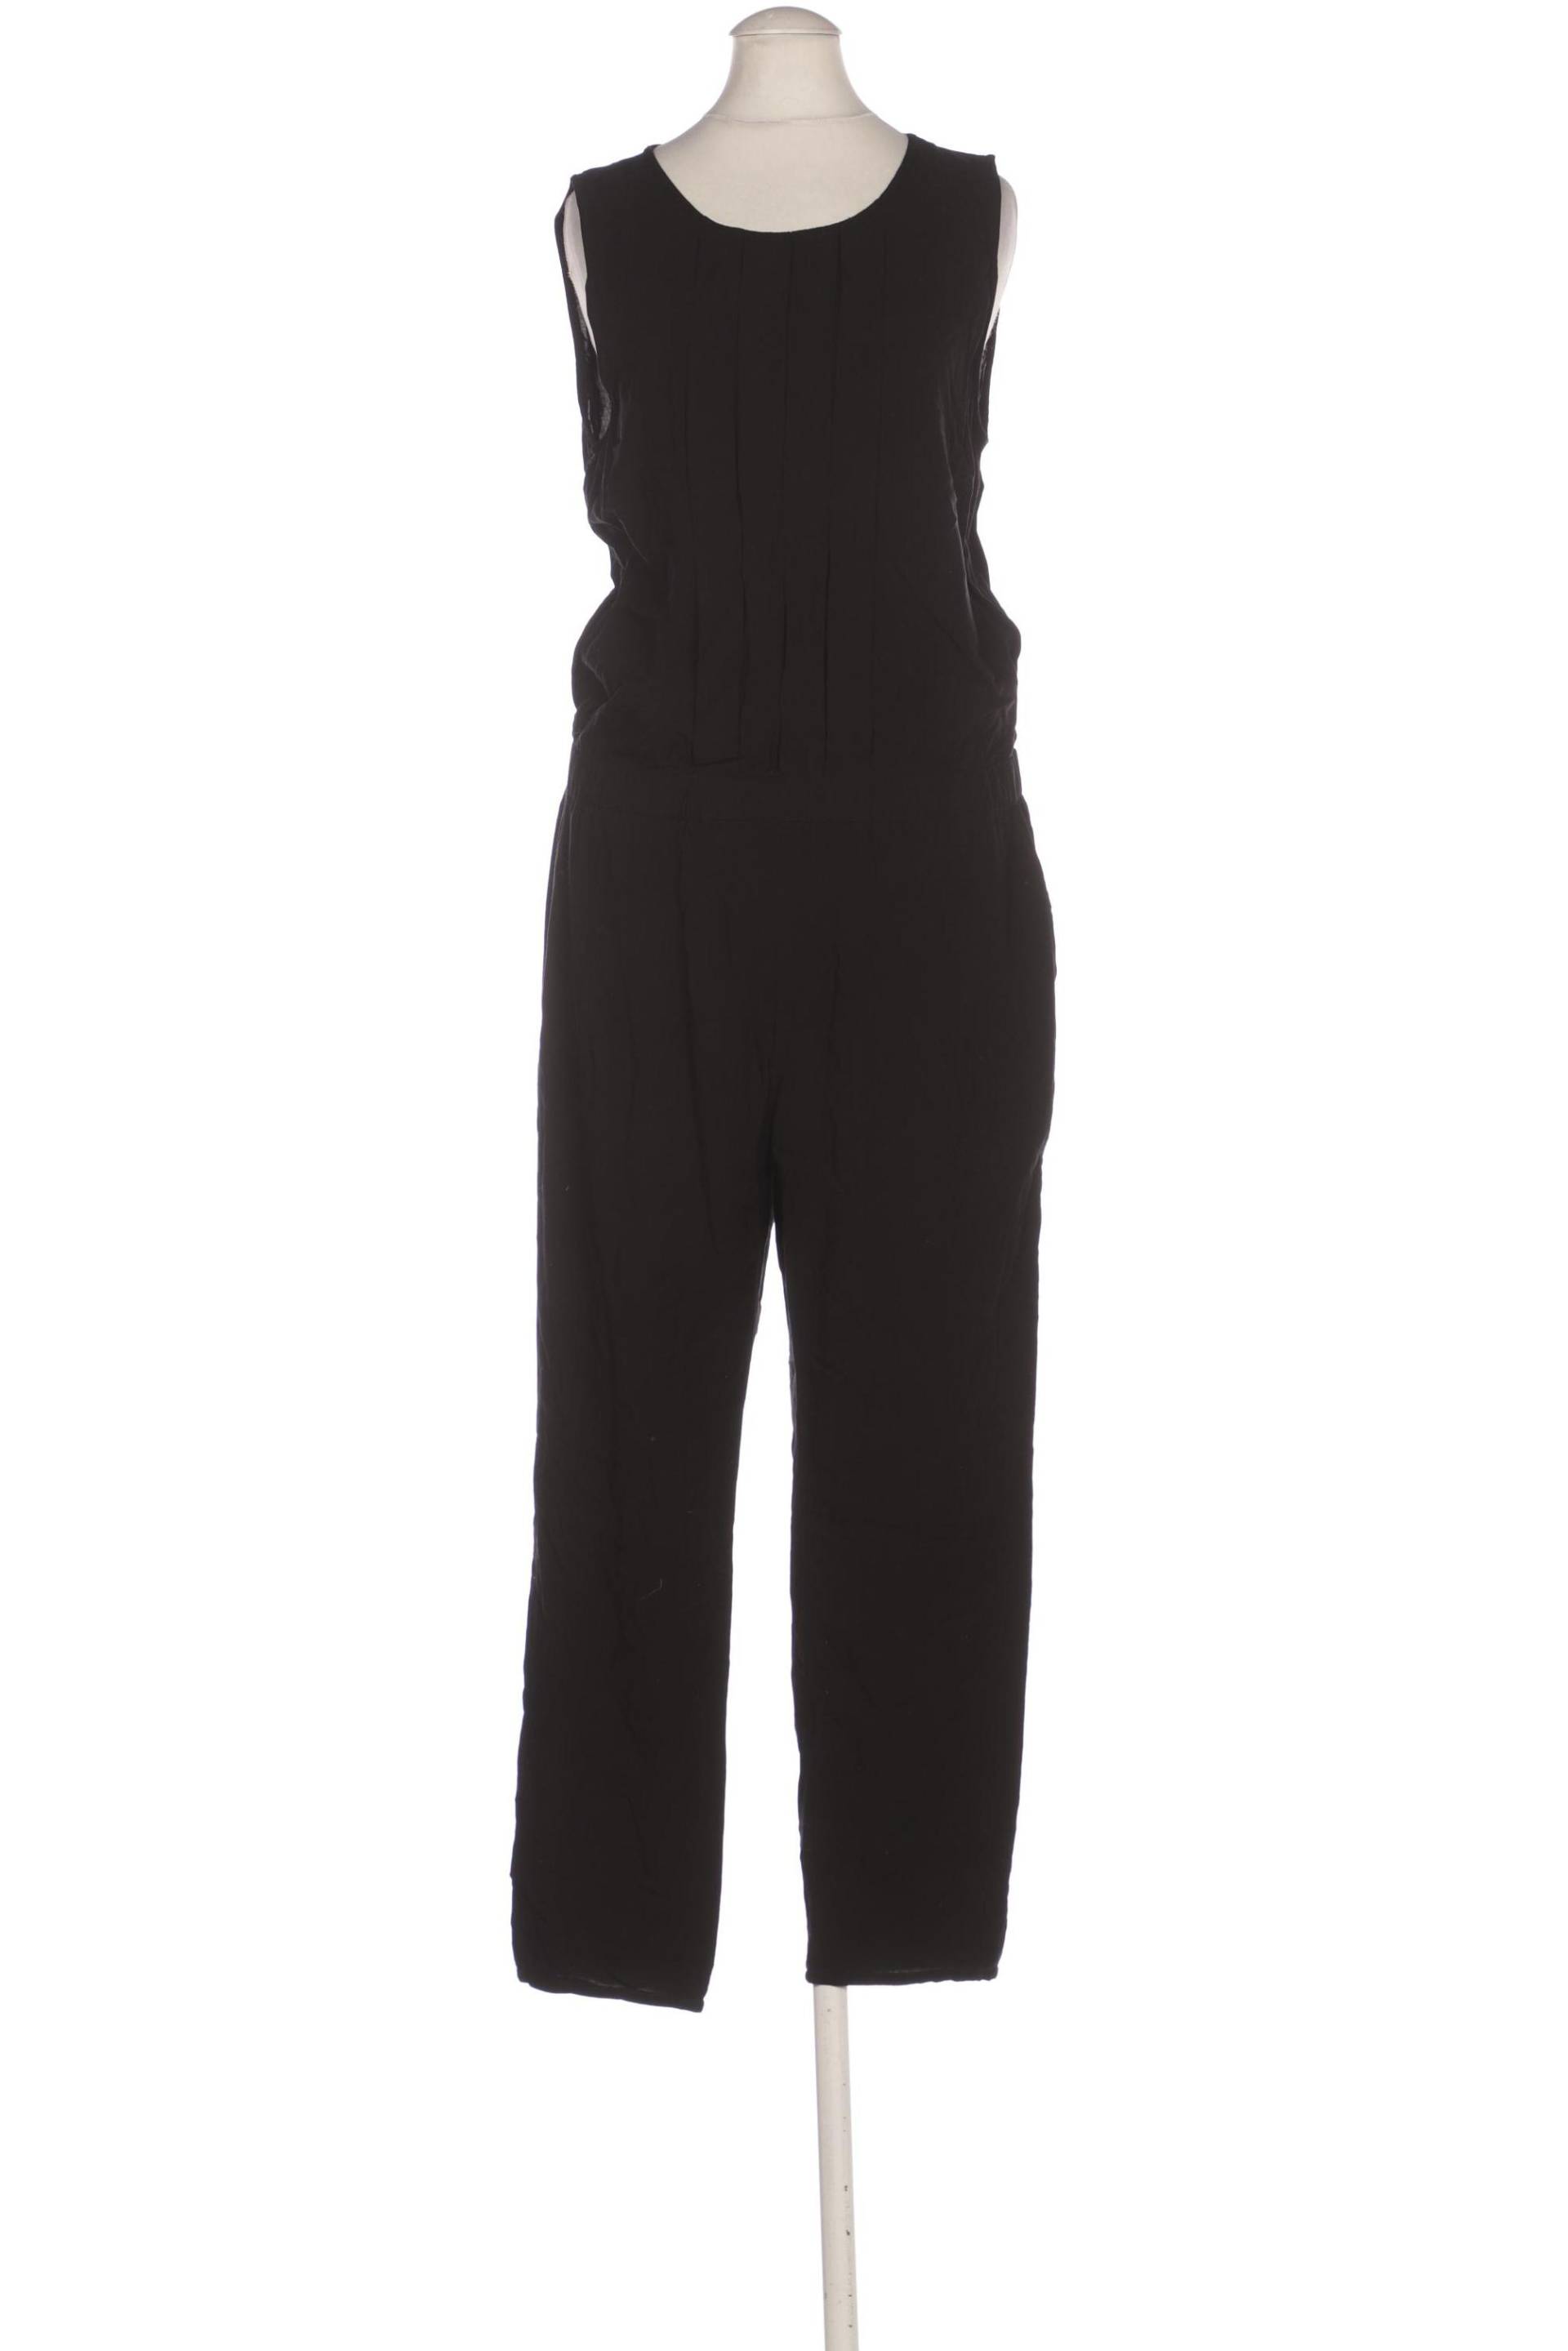 Soaked in Luxury Damen Jumpsuit/Overall, schwarz von Soaked in Luxury